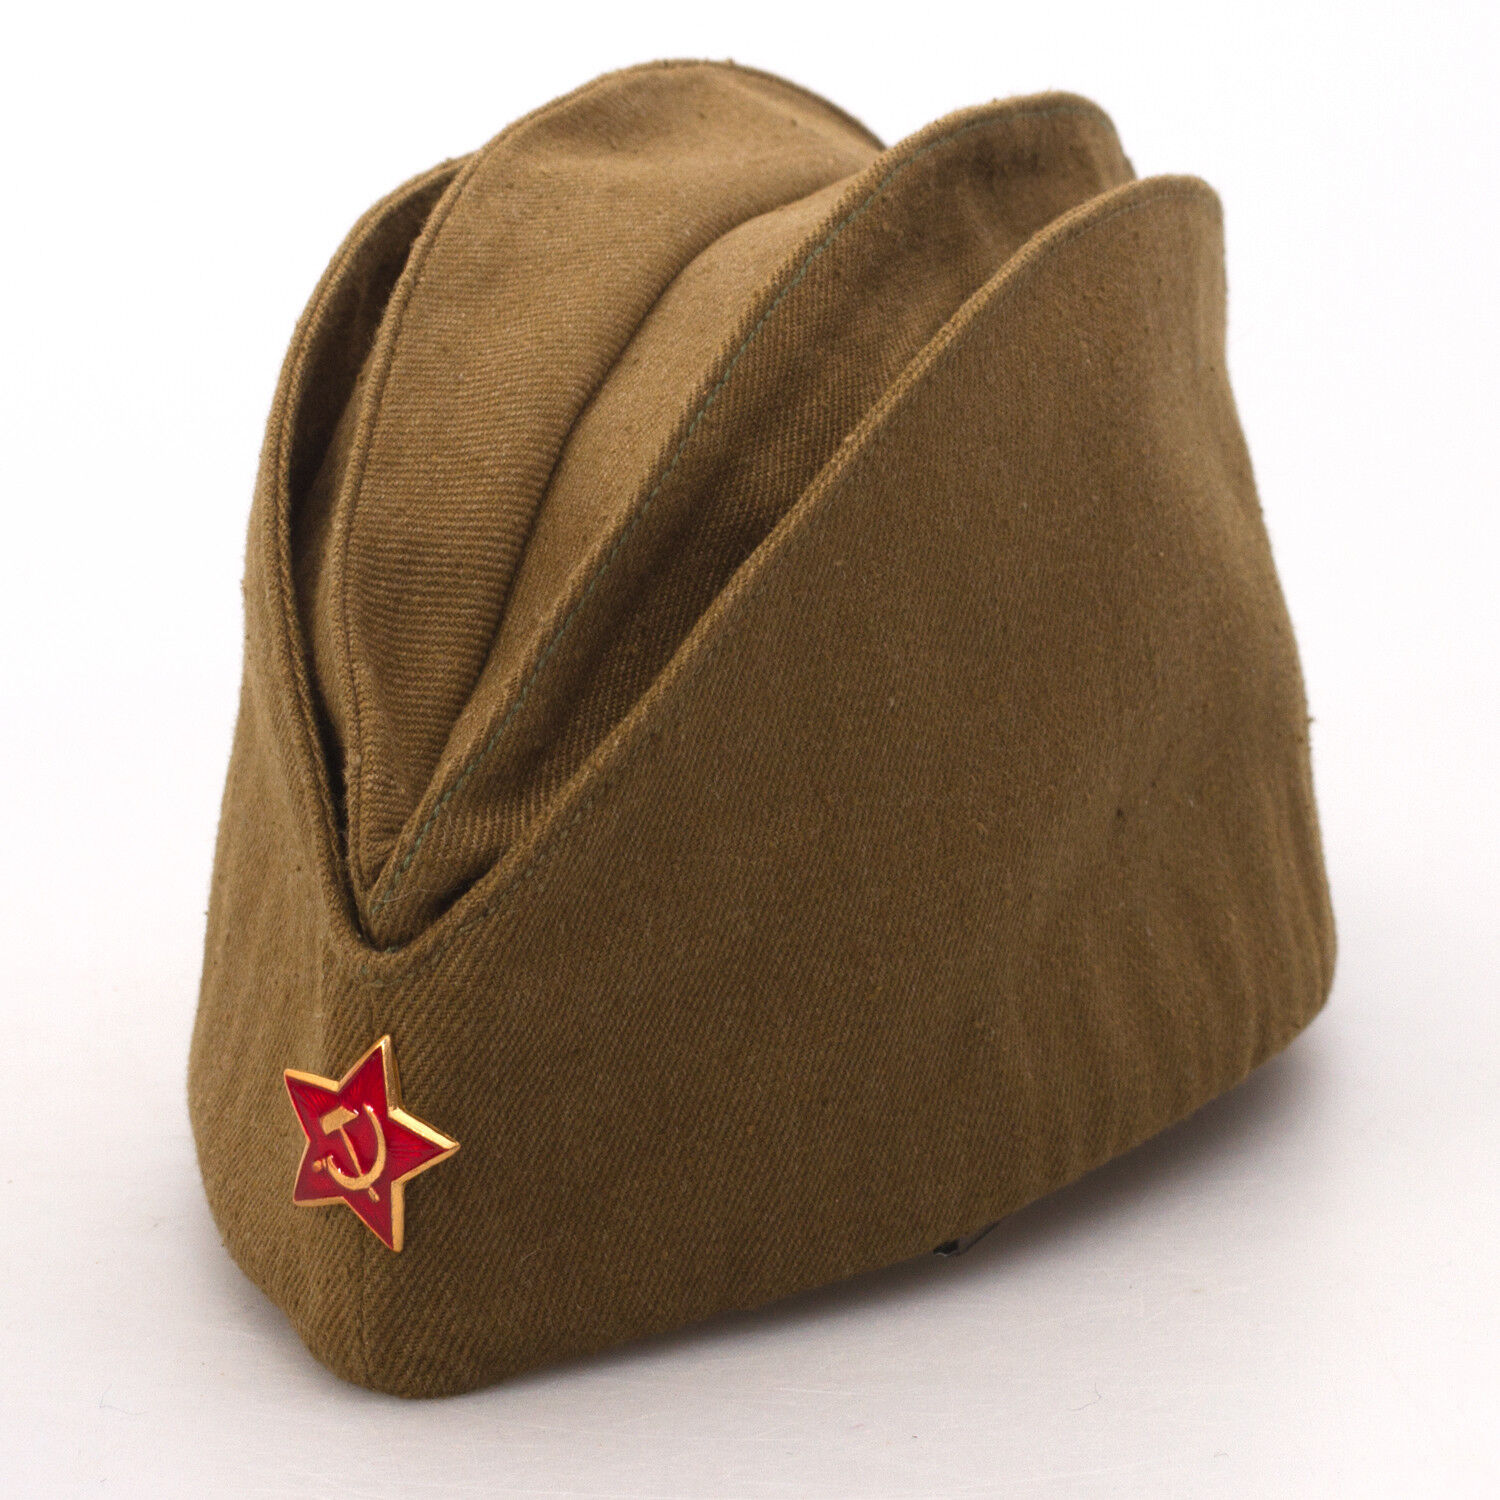 Pilotka Military Side Cap w/ Star Pin Vintage Style Khaki Soviet Soldier Hat Cap